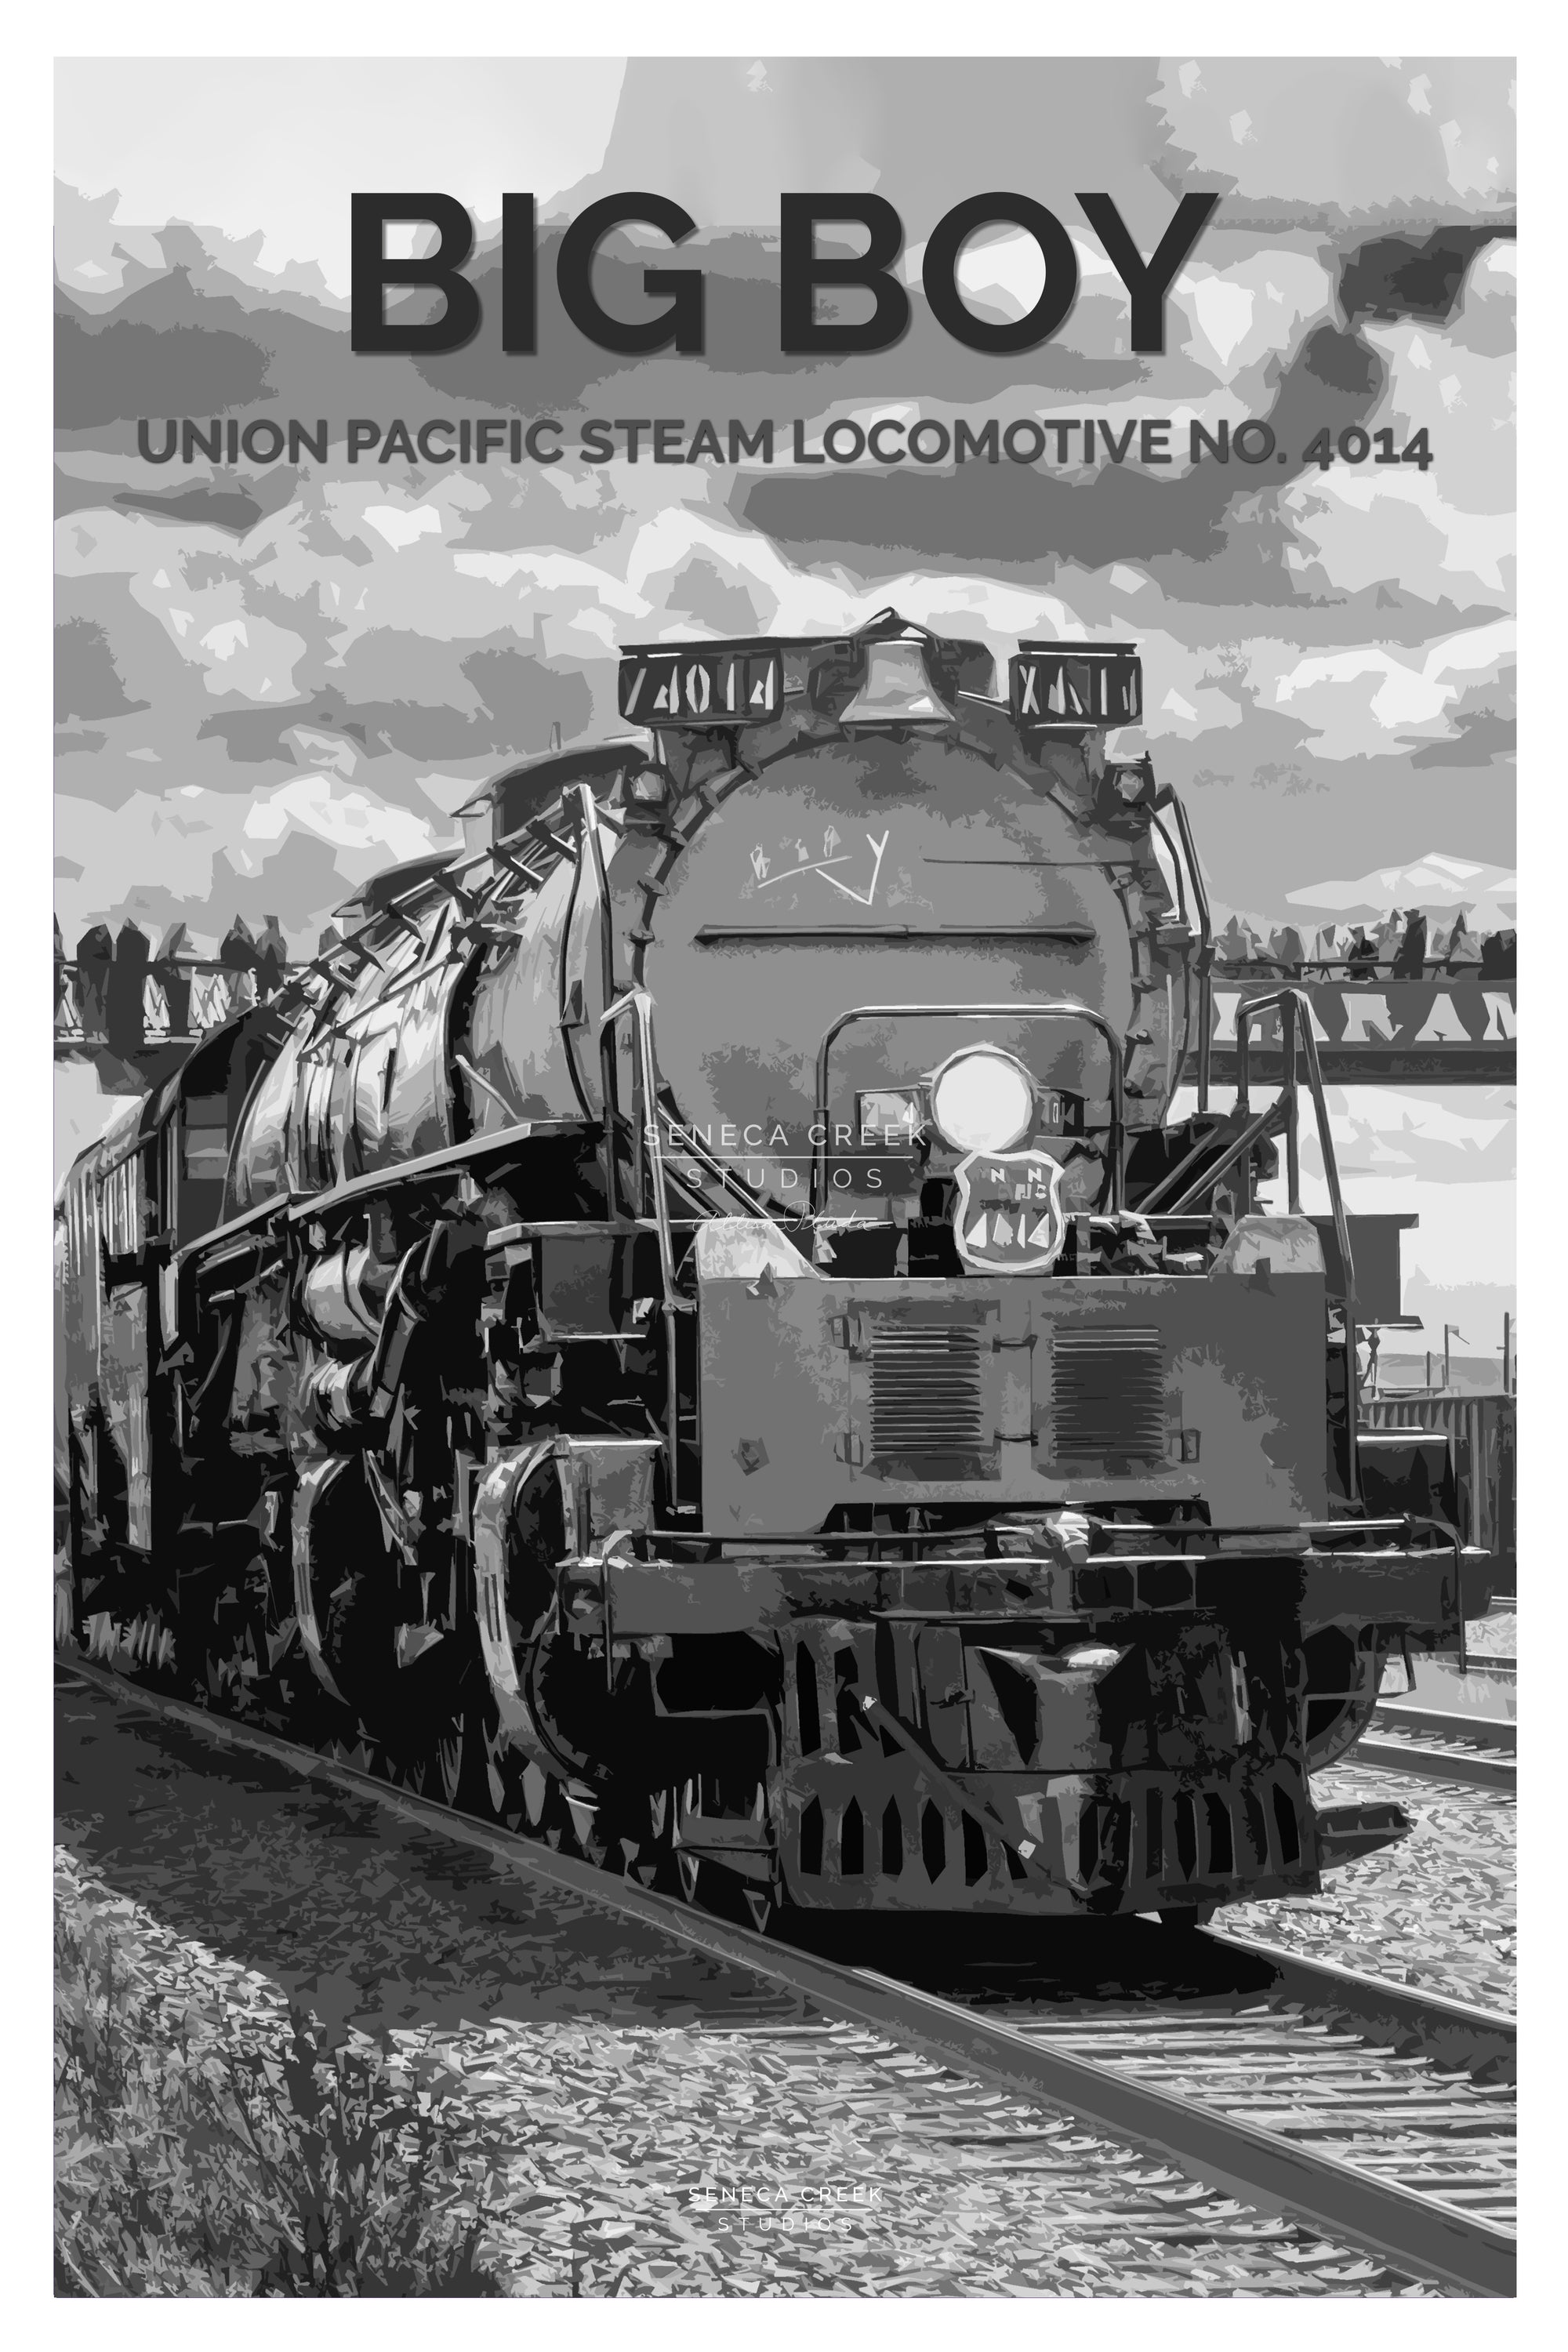 “Big Boy Union Pacific Steam Locomotive No. 4014” 12x18 High Quality Vintage Poster Art Print - Original Artwork